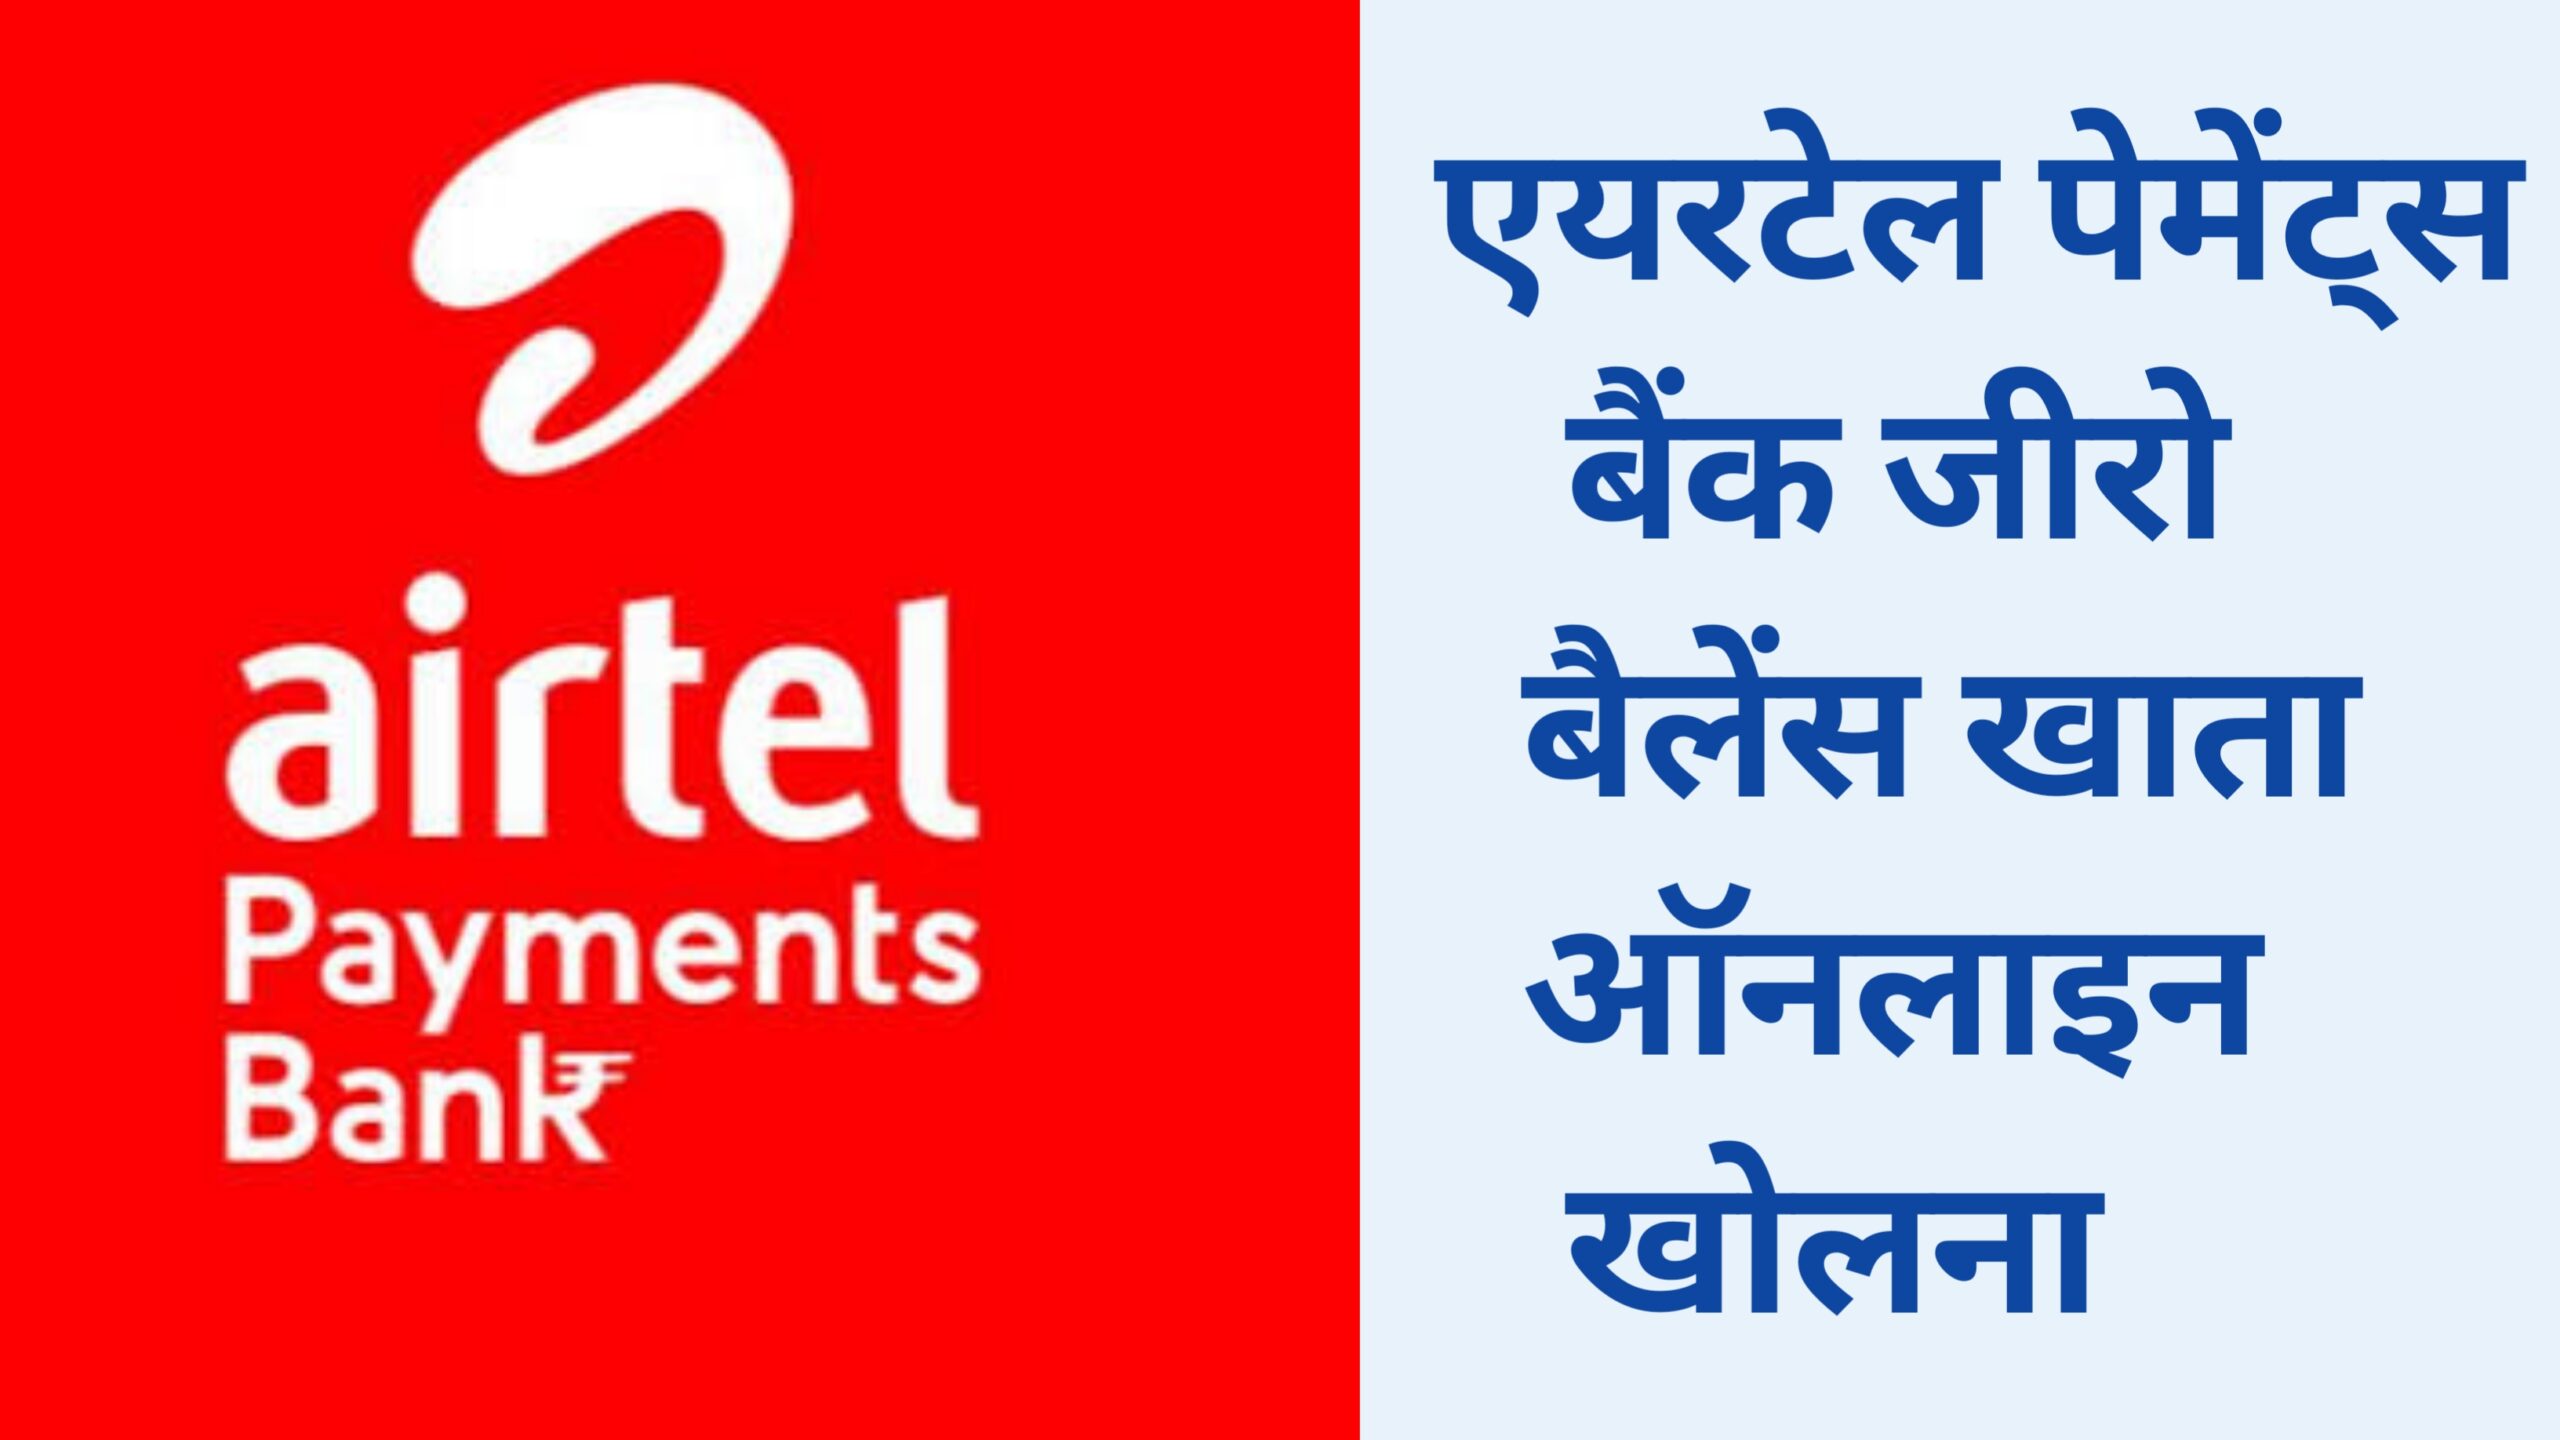 Airtel payment bank zero balance account opening online